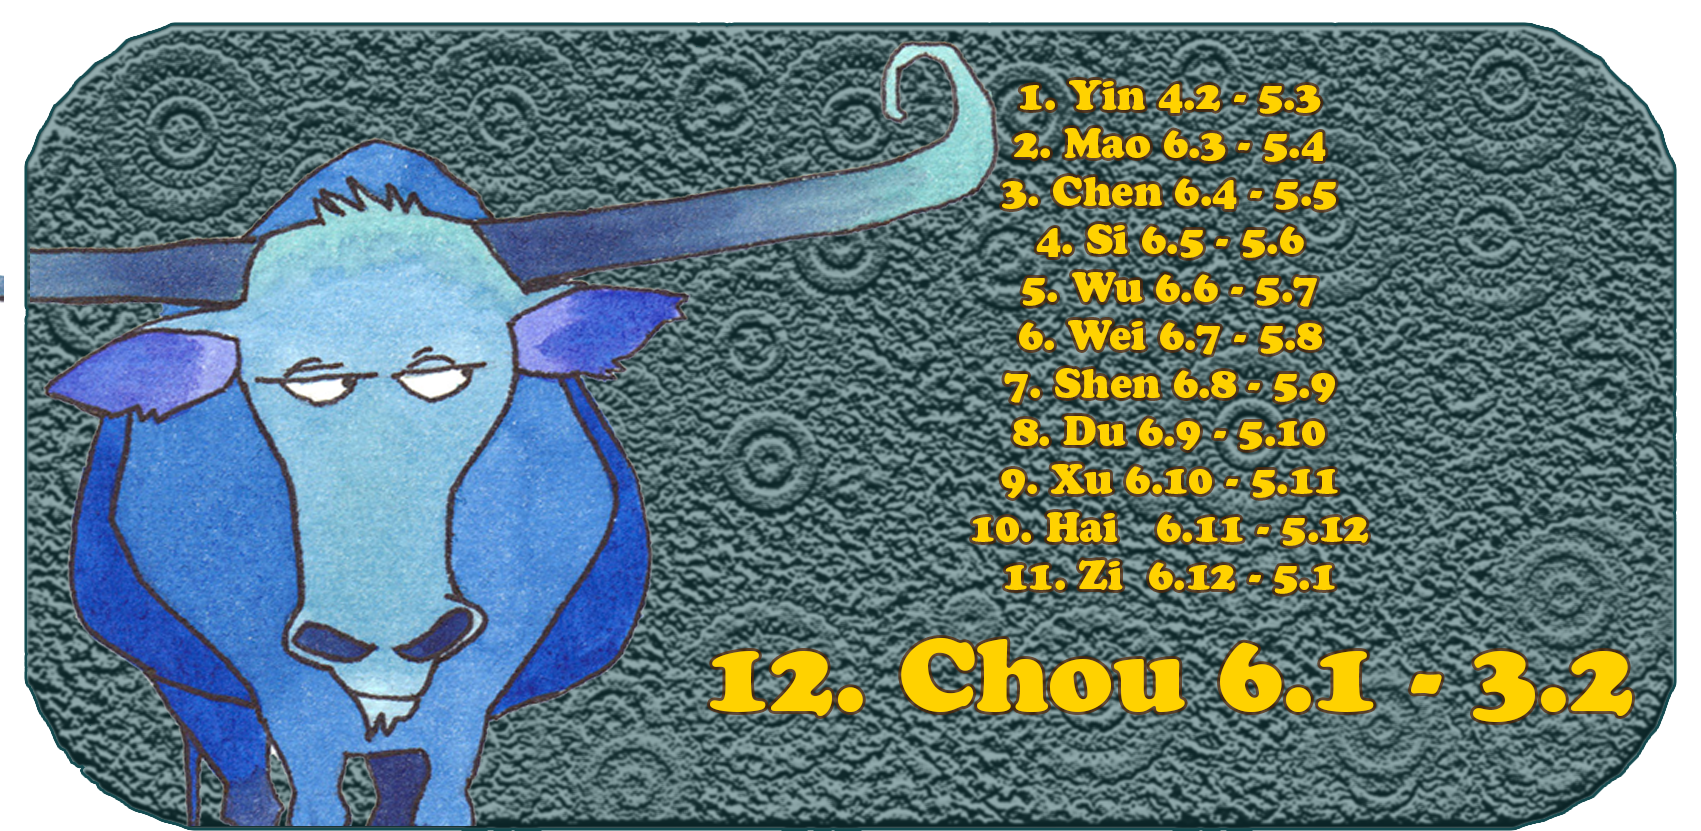 Zodíaco Chinês | Os Doze Animais Chineses | Touro, janeiro, mês 12, Chou